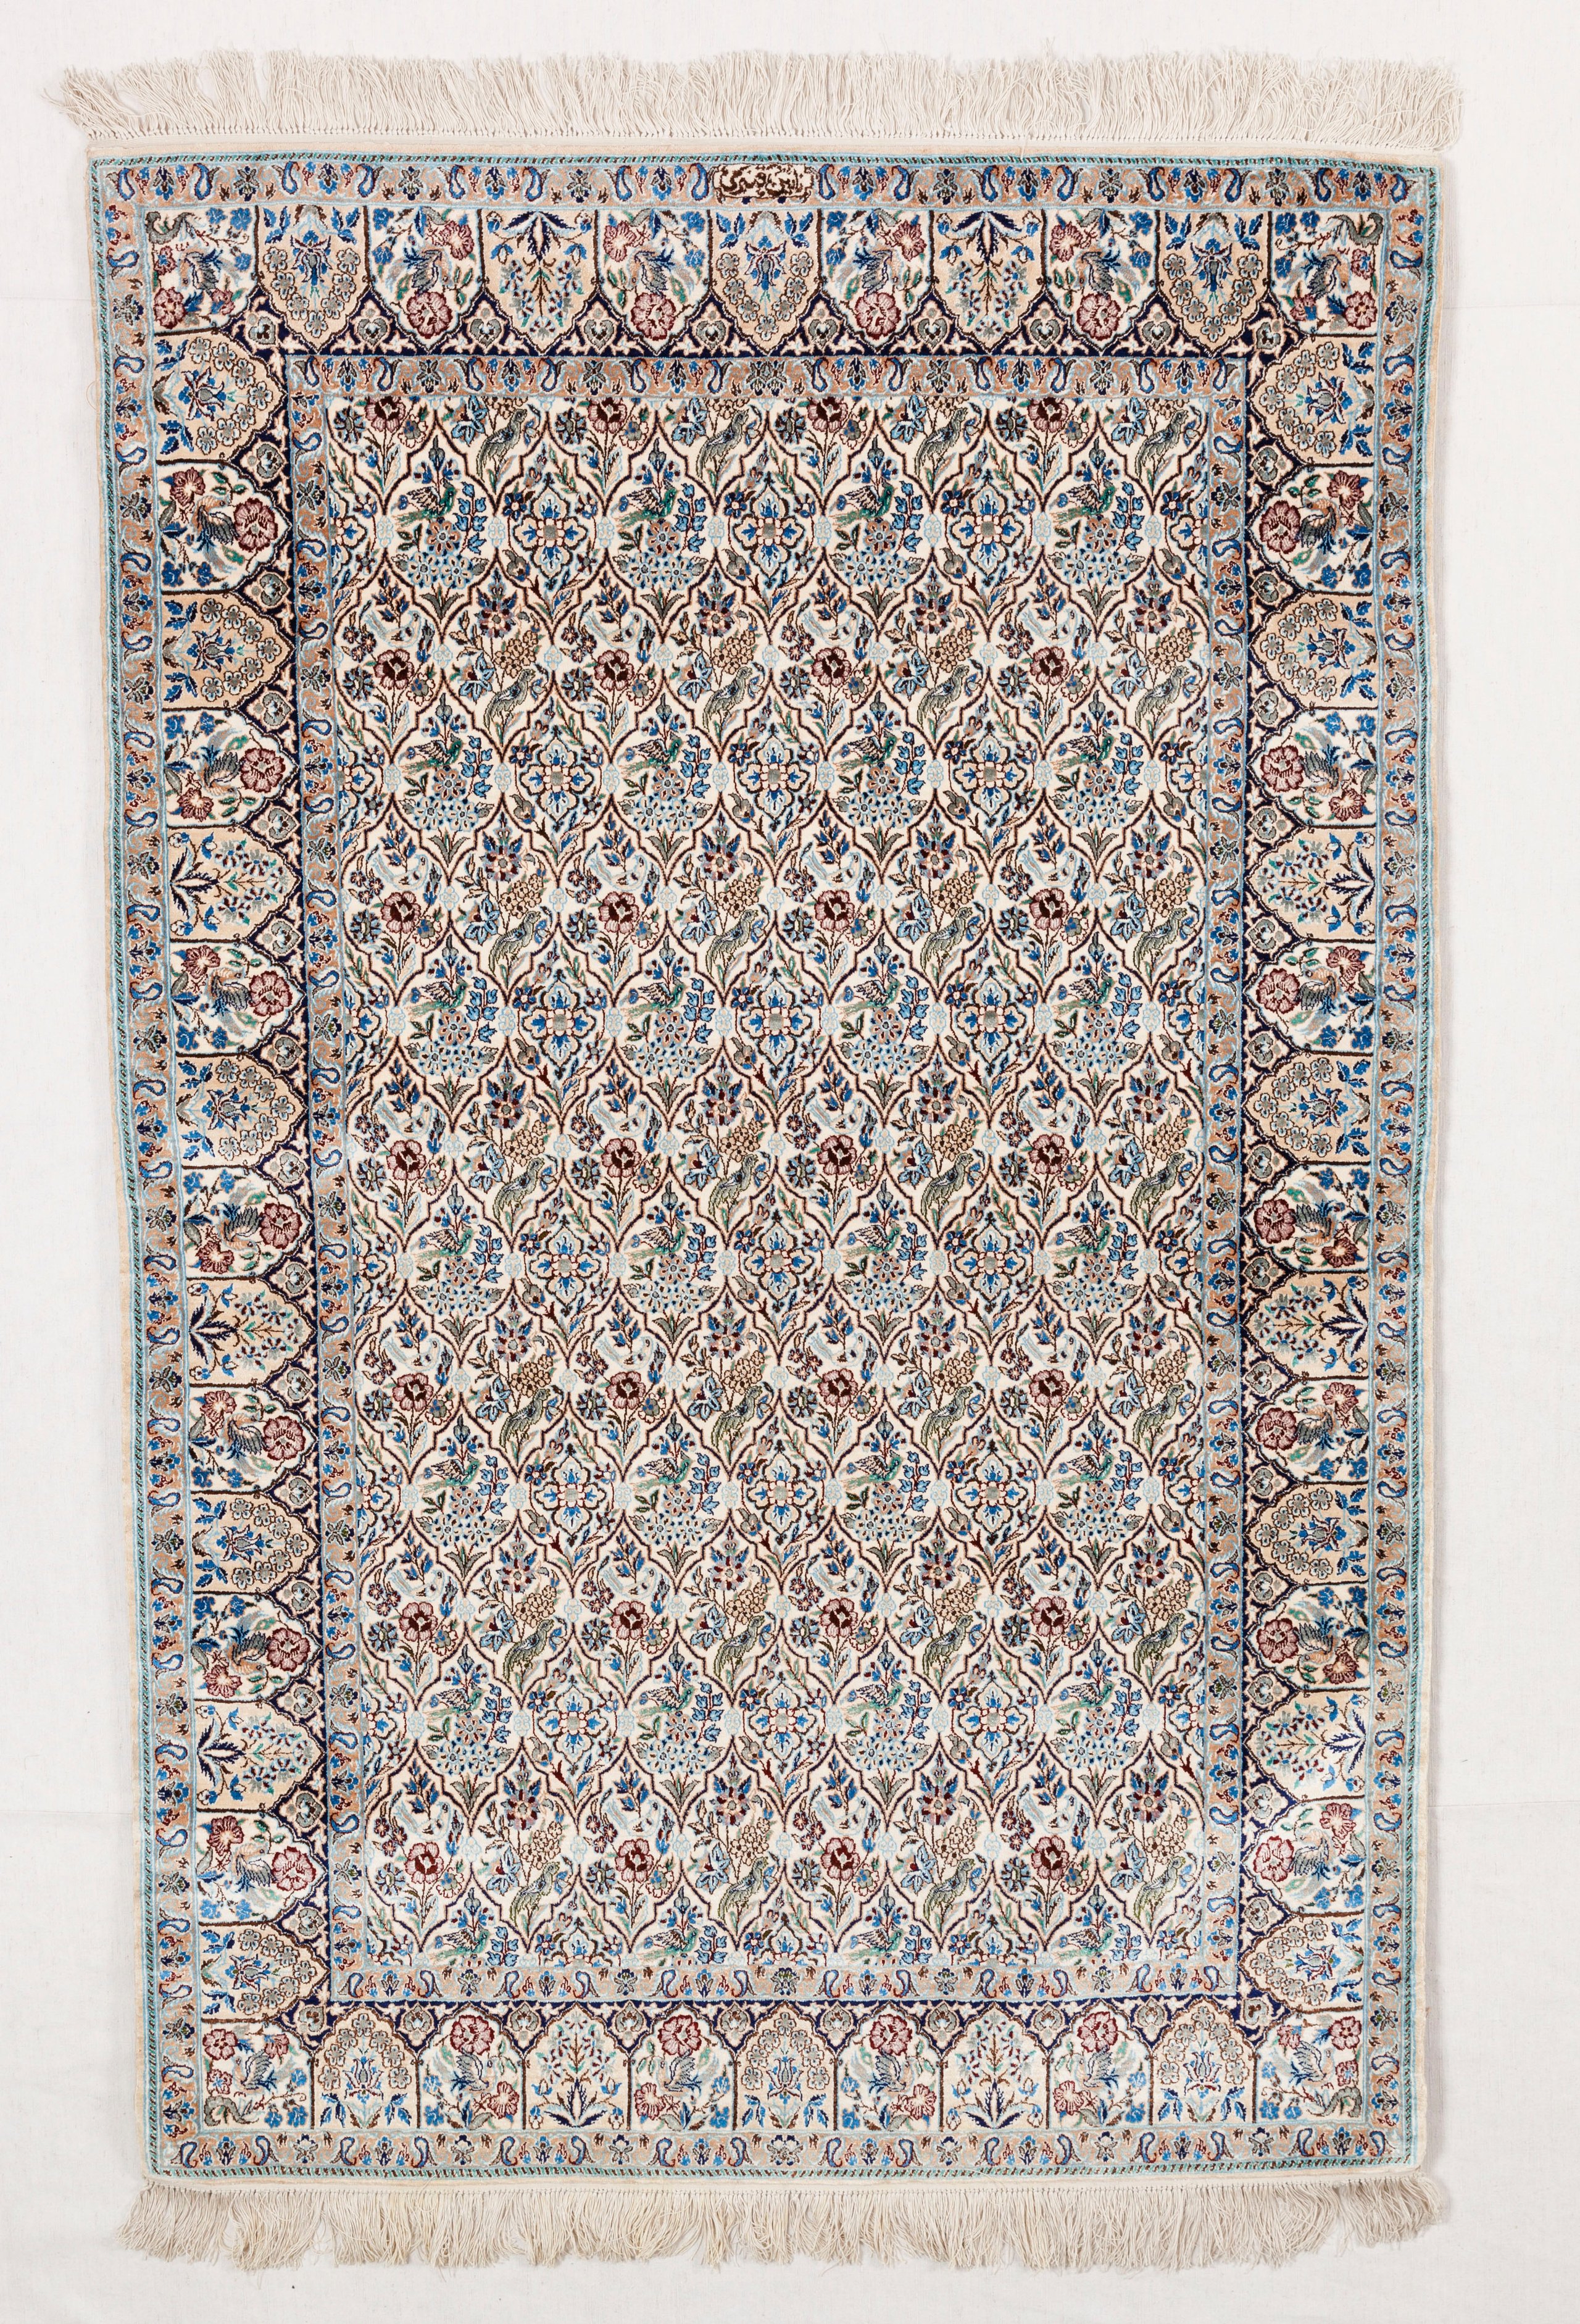 Hand knotted silk carpet by Haj Reza